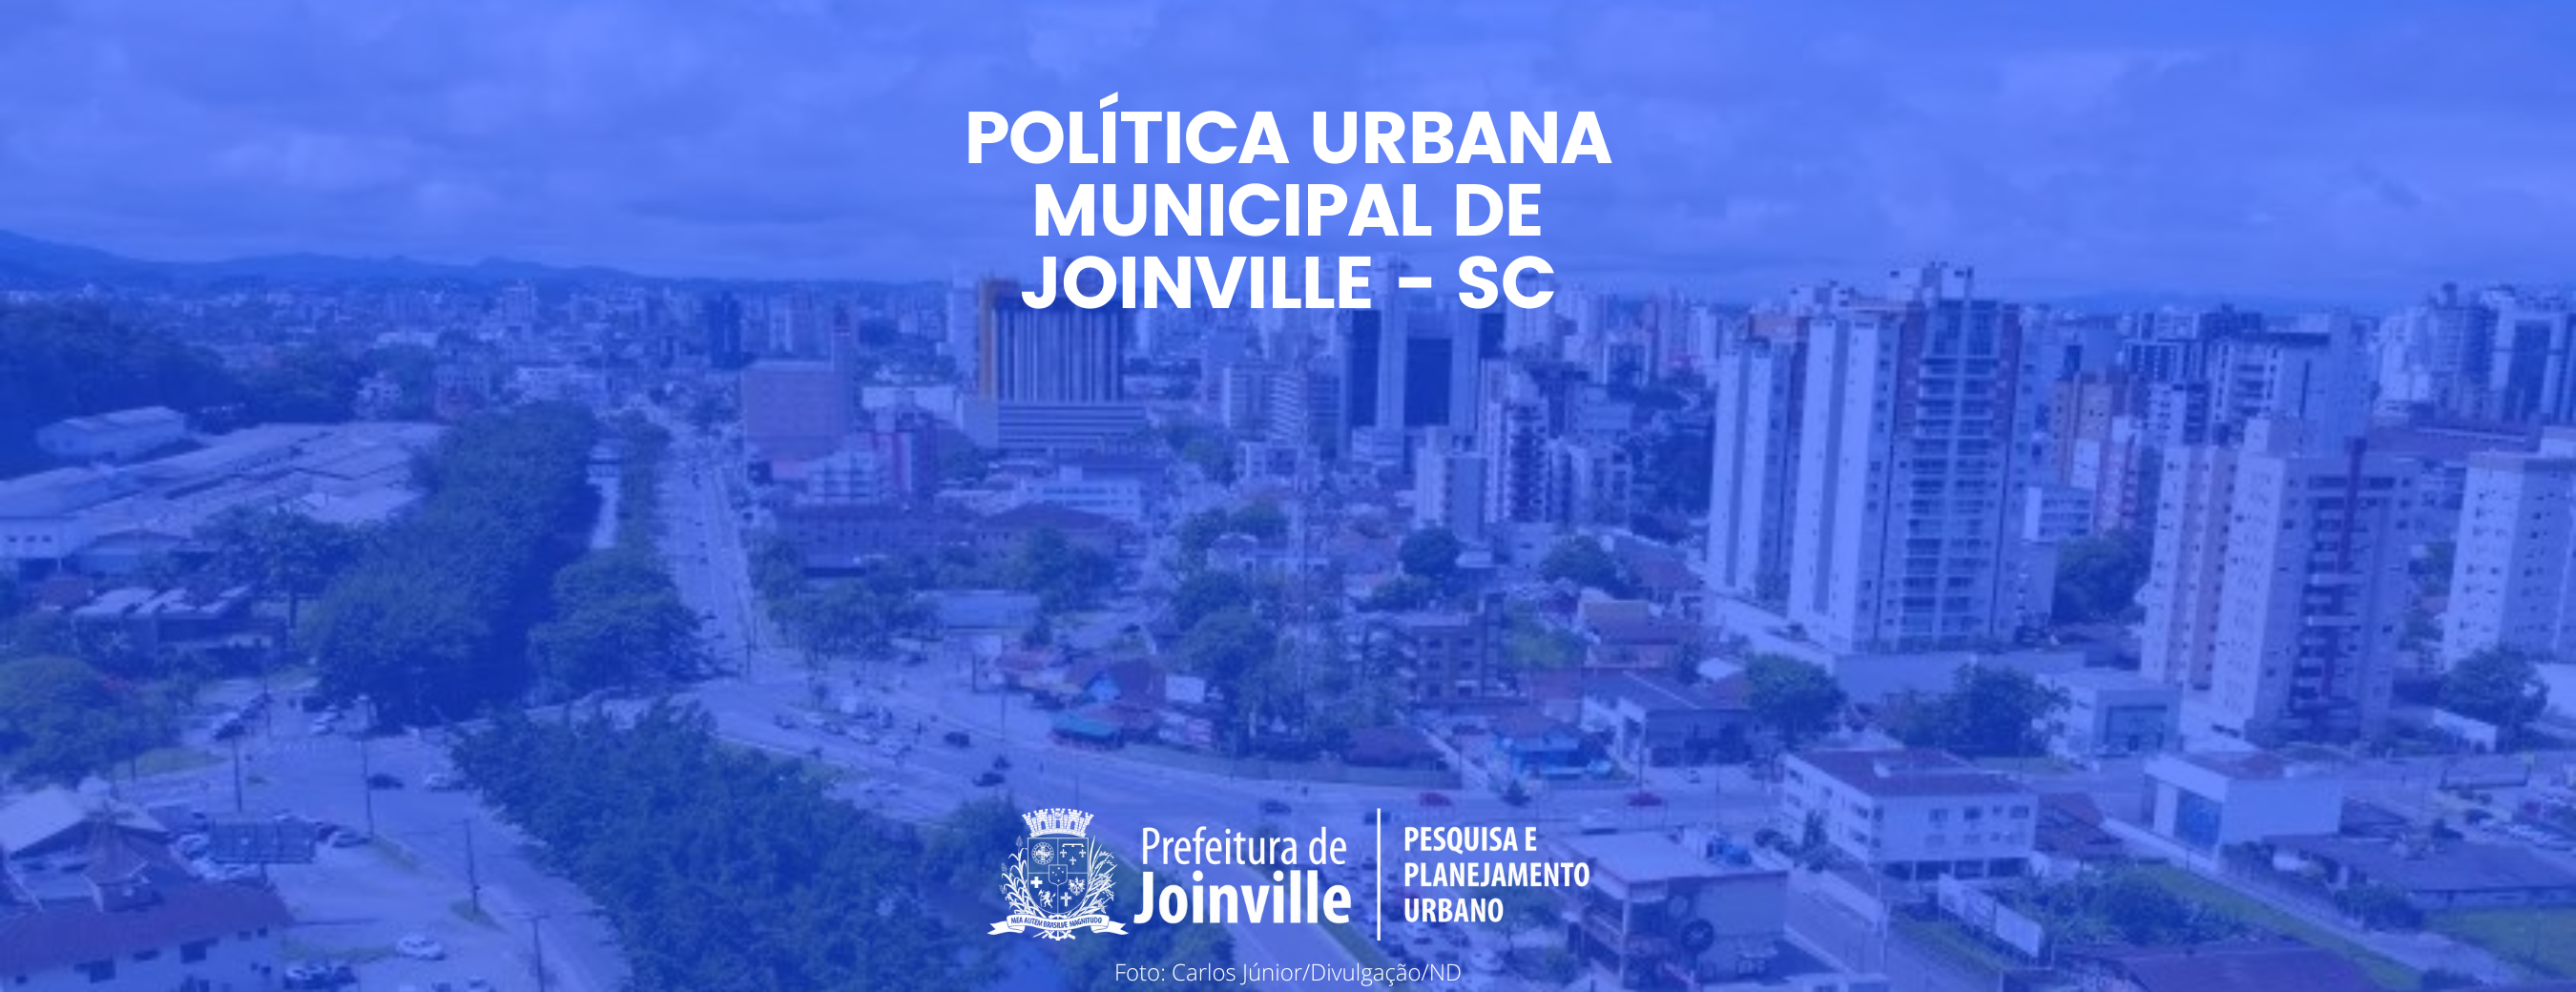 POLÍTICA URBANA MUNICIPAL DE JOINVILLE - SC